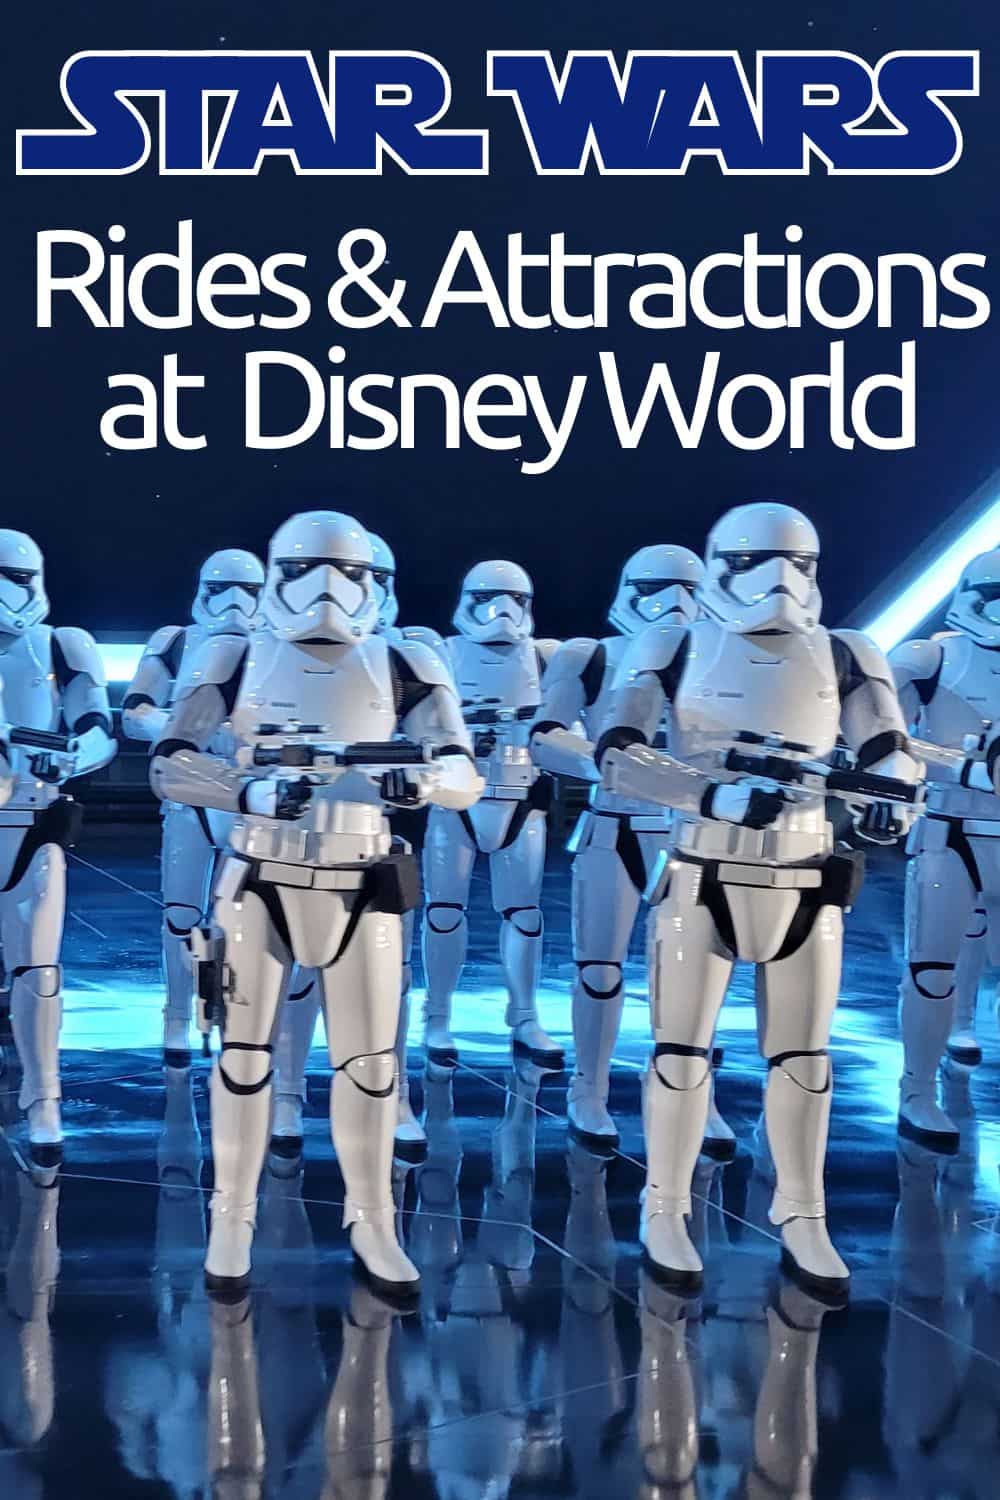 10 BEST Star Wars Rides & Attractions at Disney World